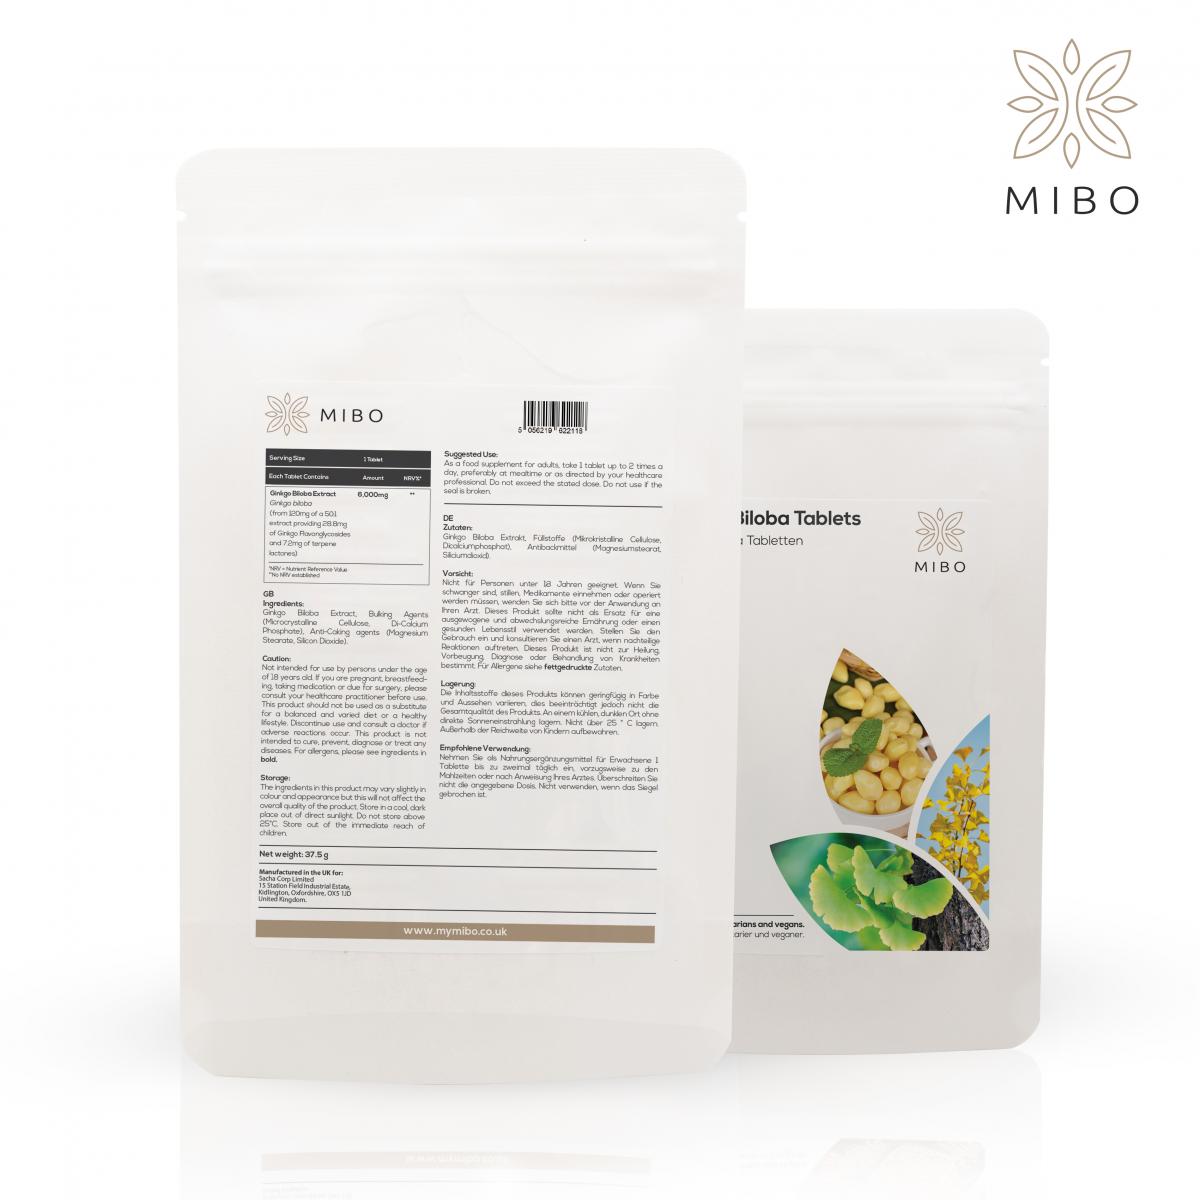 MiBo - Ginkgo Biloba 6000mg - 125 Tablets